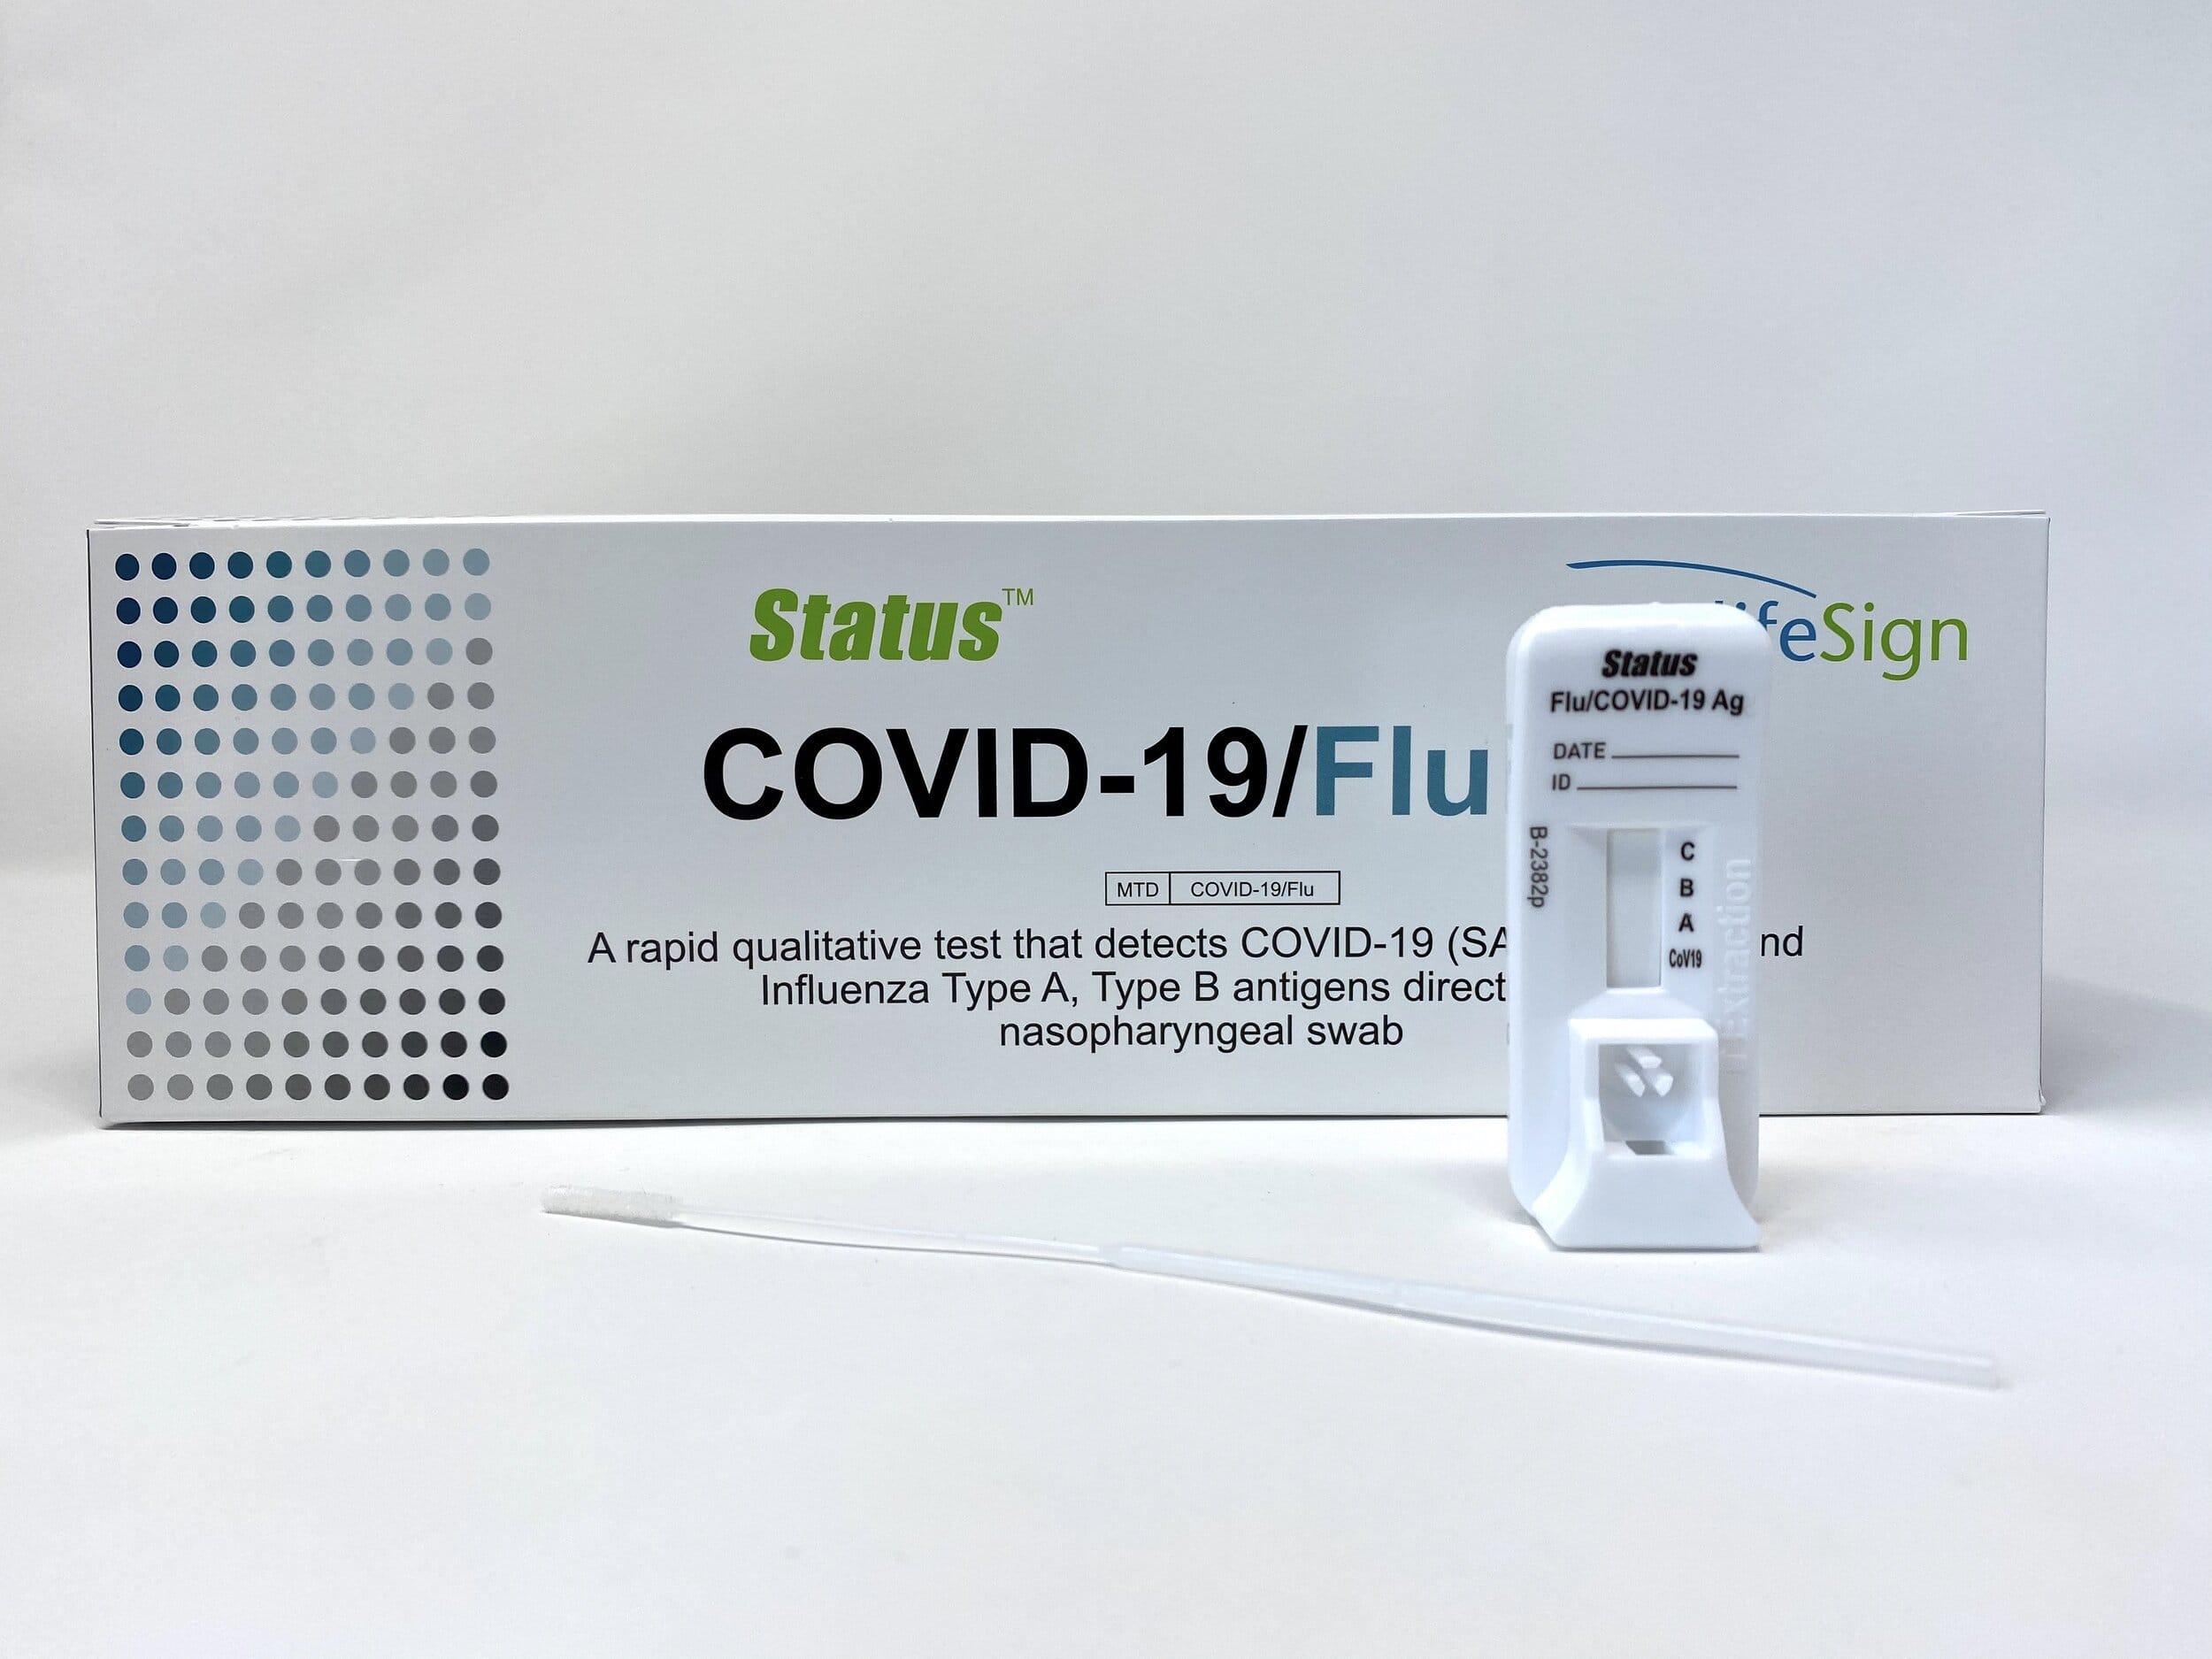 Status COVID-19/flu